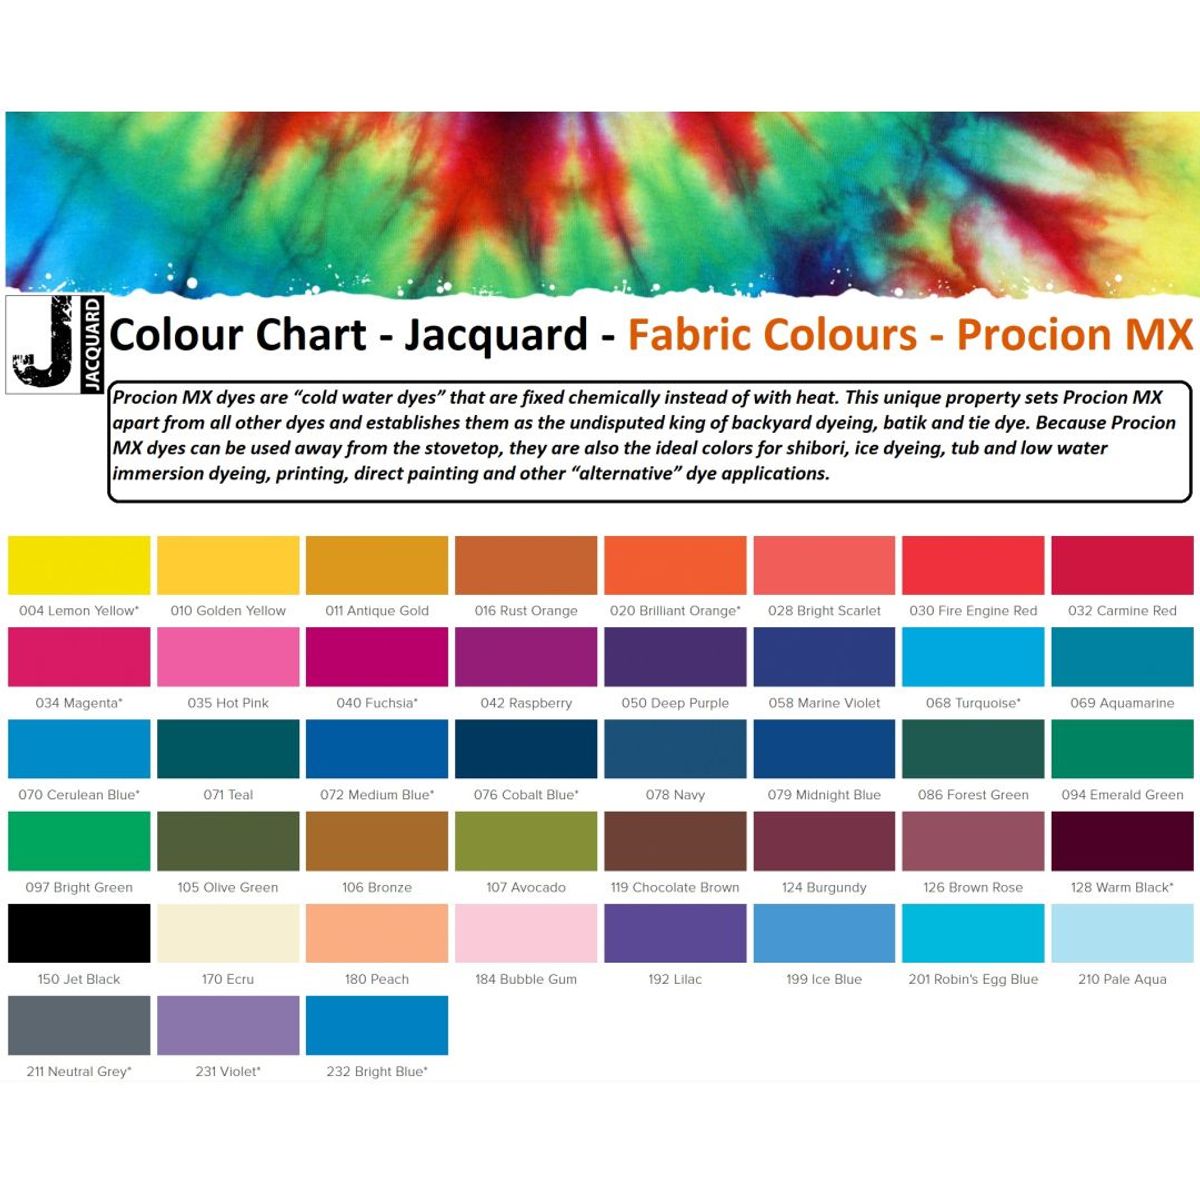 Jacquard - Procion MX Dye - Stoff Textil - Himbeere 042